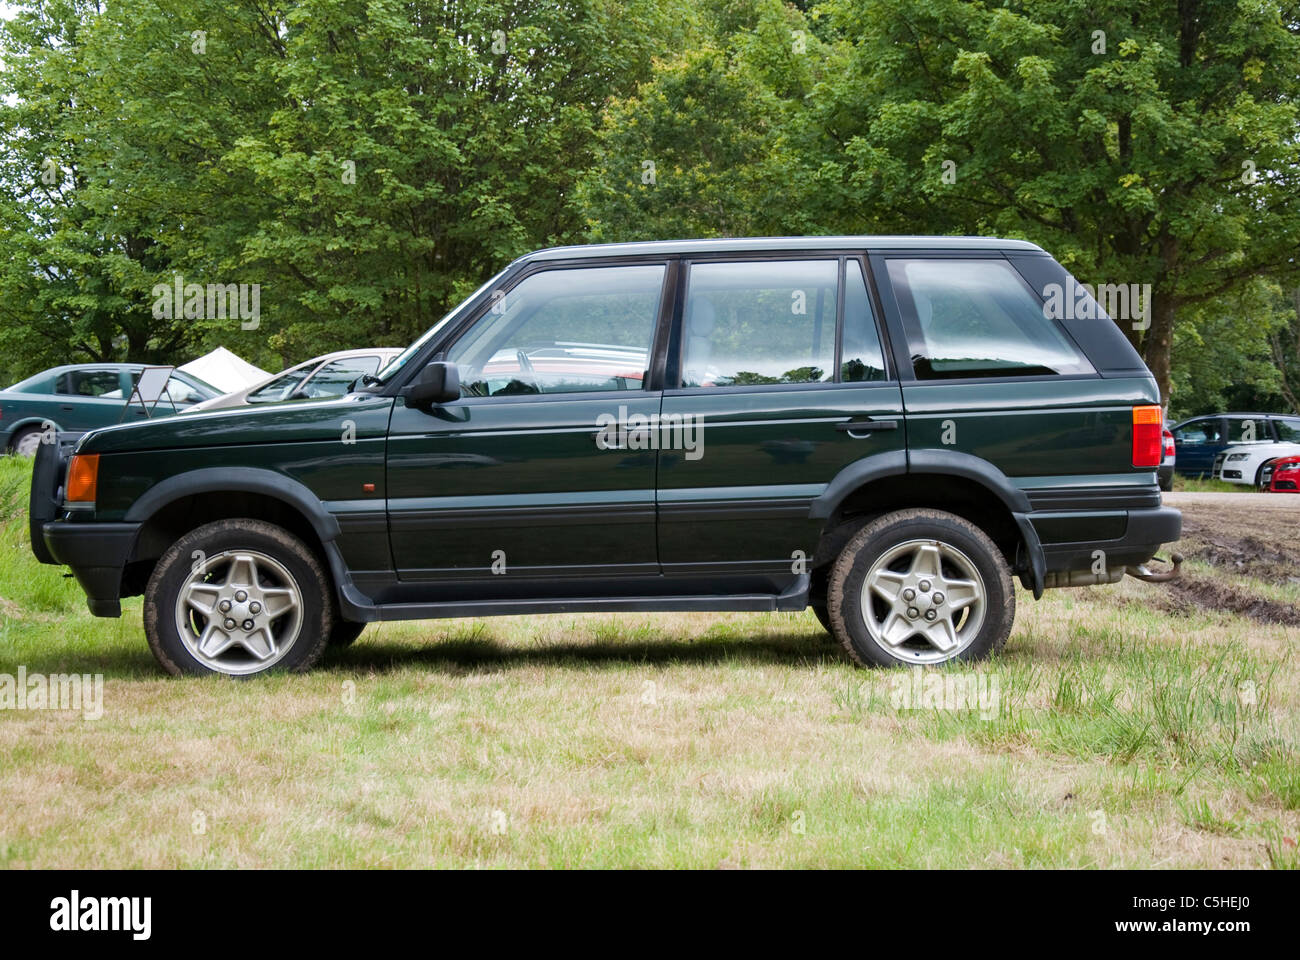 1997 Dark Green Land Rover Range Rover 4.6 Petrol HSE Stock Photo